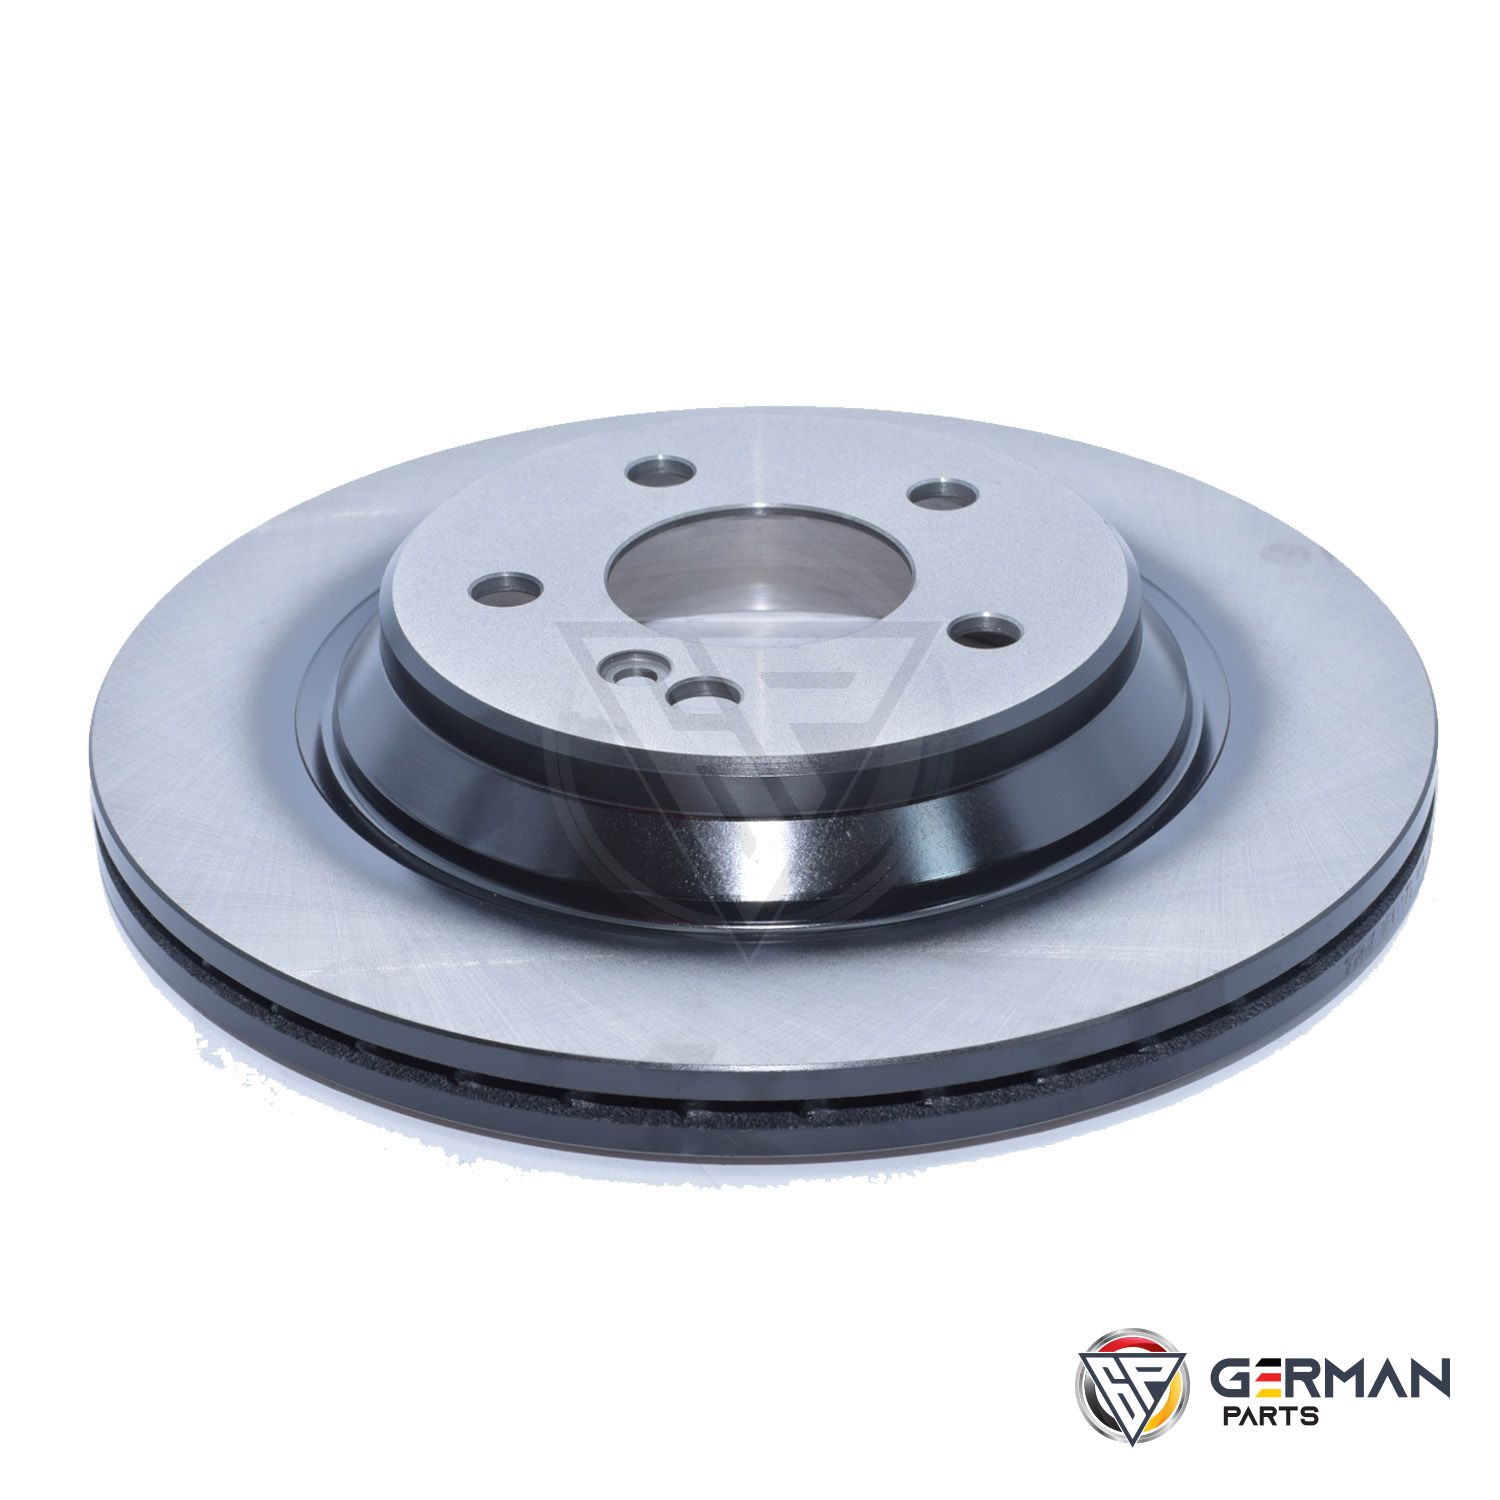 Buy TRW Rear Brake Disc 2204230212 - German Parts